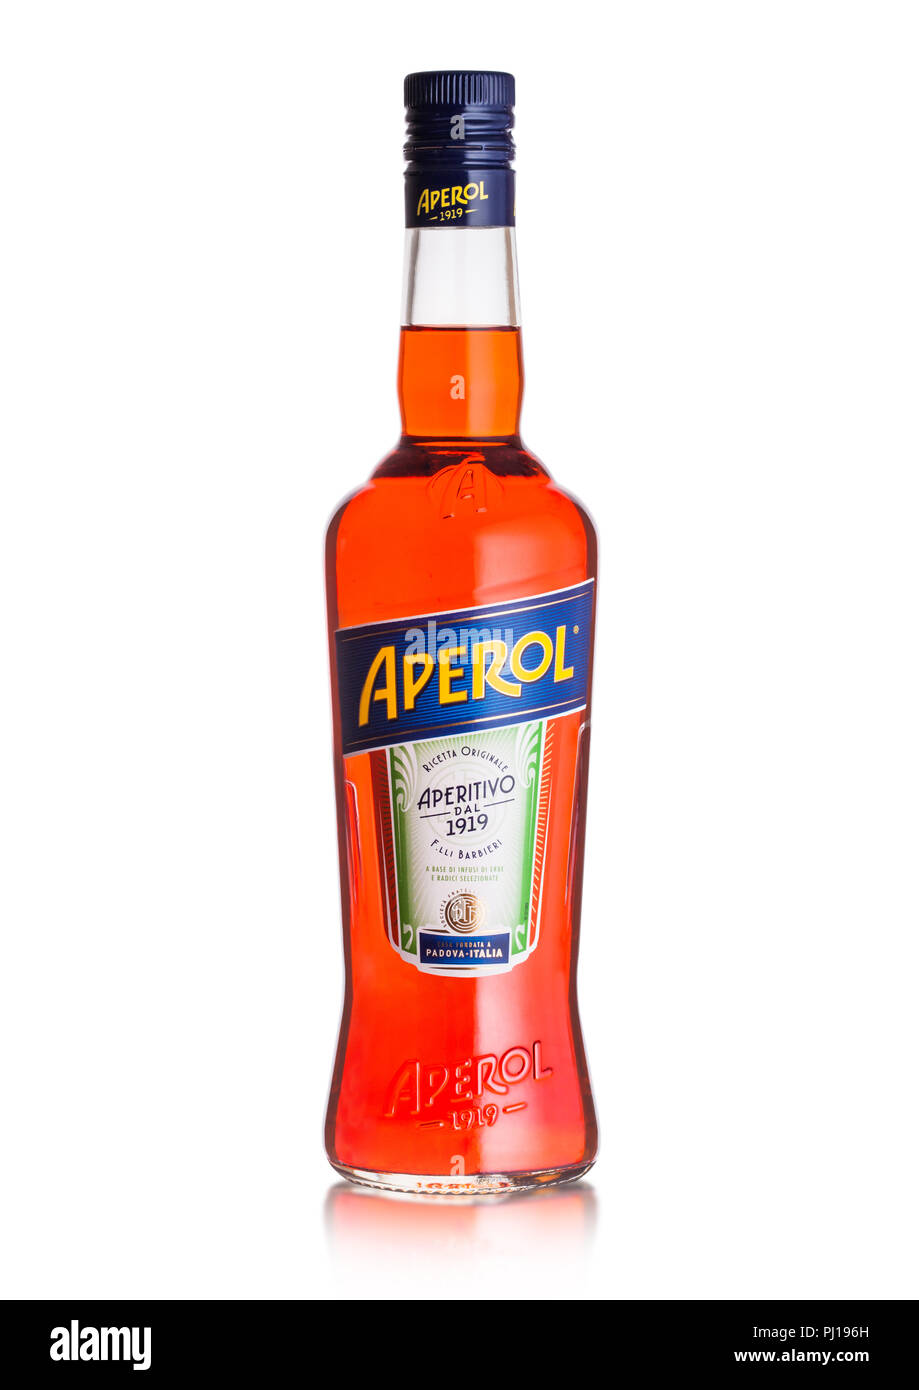 LONDON, UK - SEPTEMBER 03, 2018: Bottle of Aperol Aperitivo summer cocktail drink on white background. Stock Photo